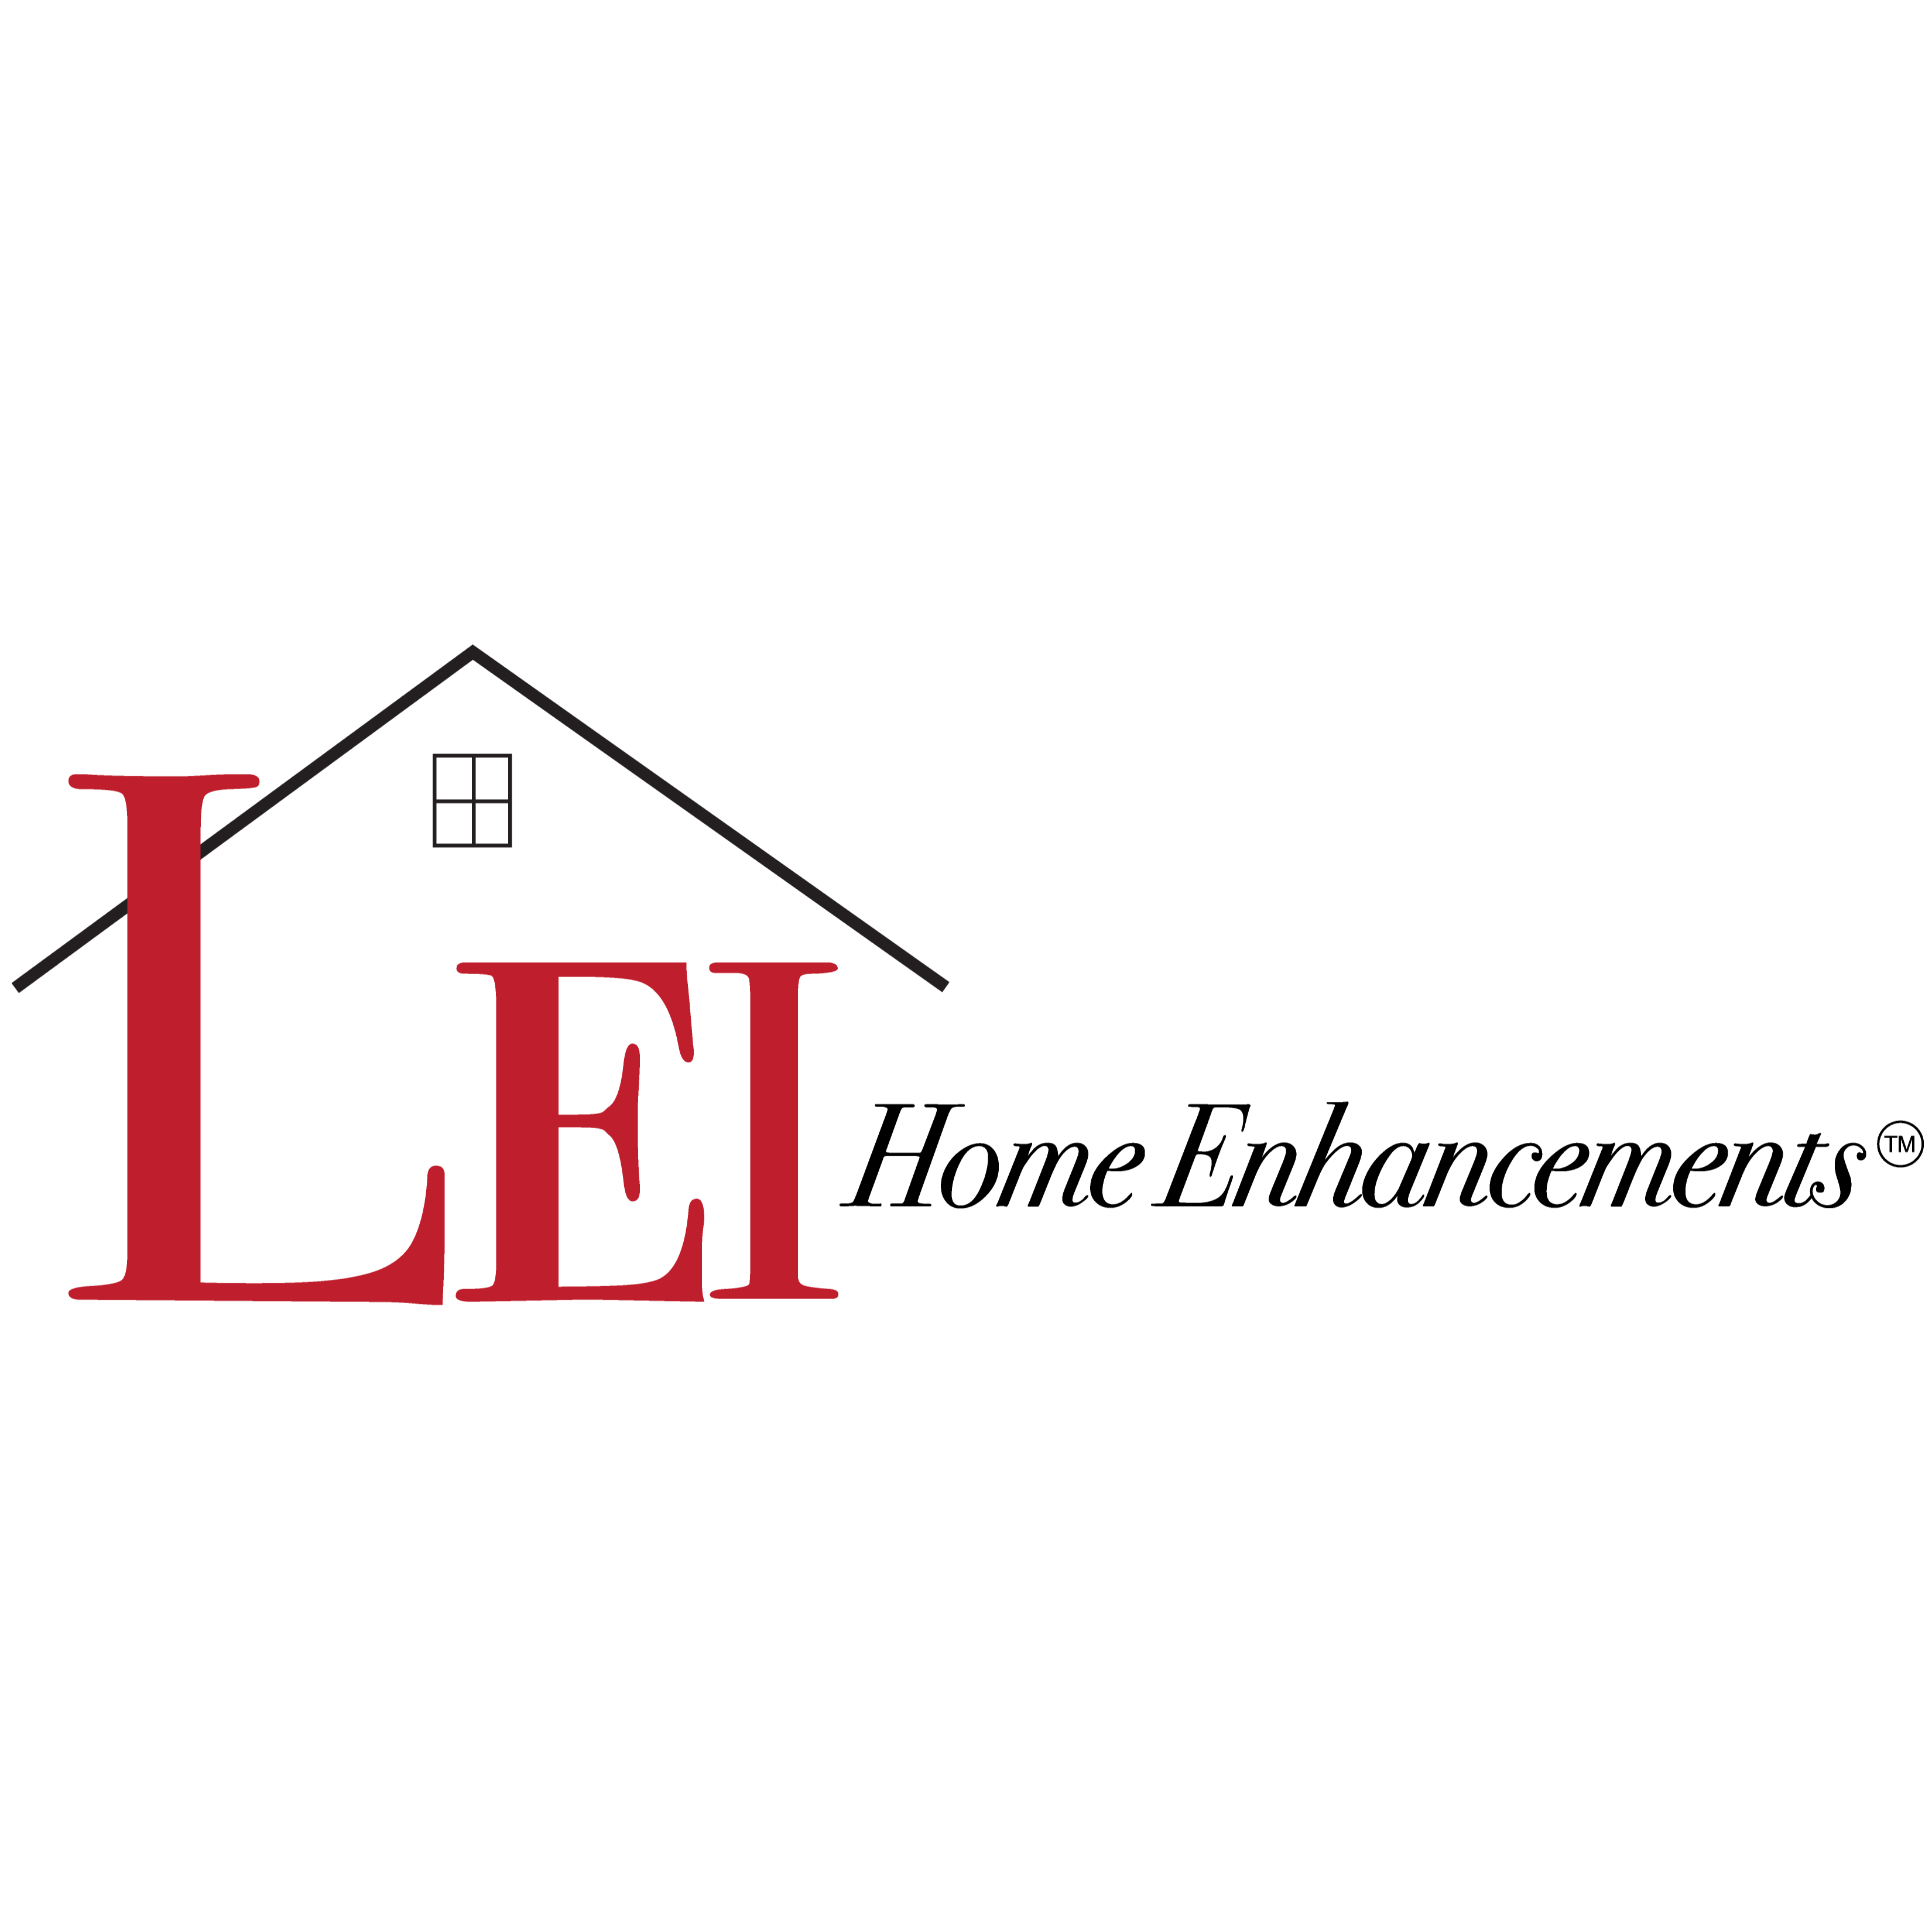 LEI Home Enhancements of Columbus Logo